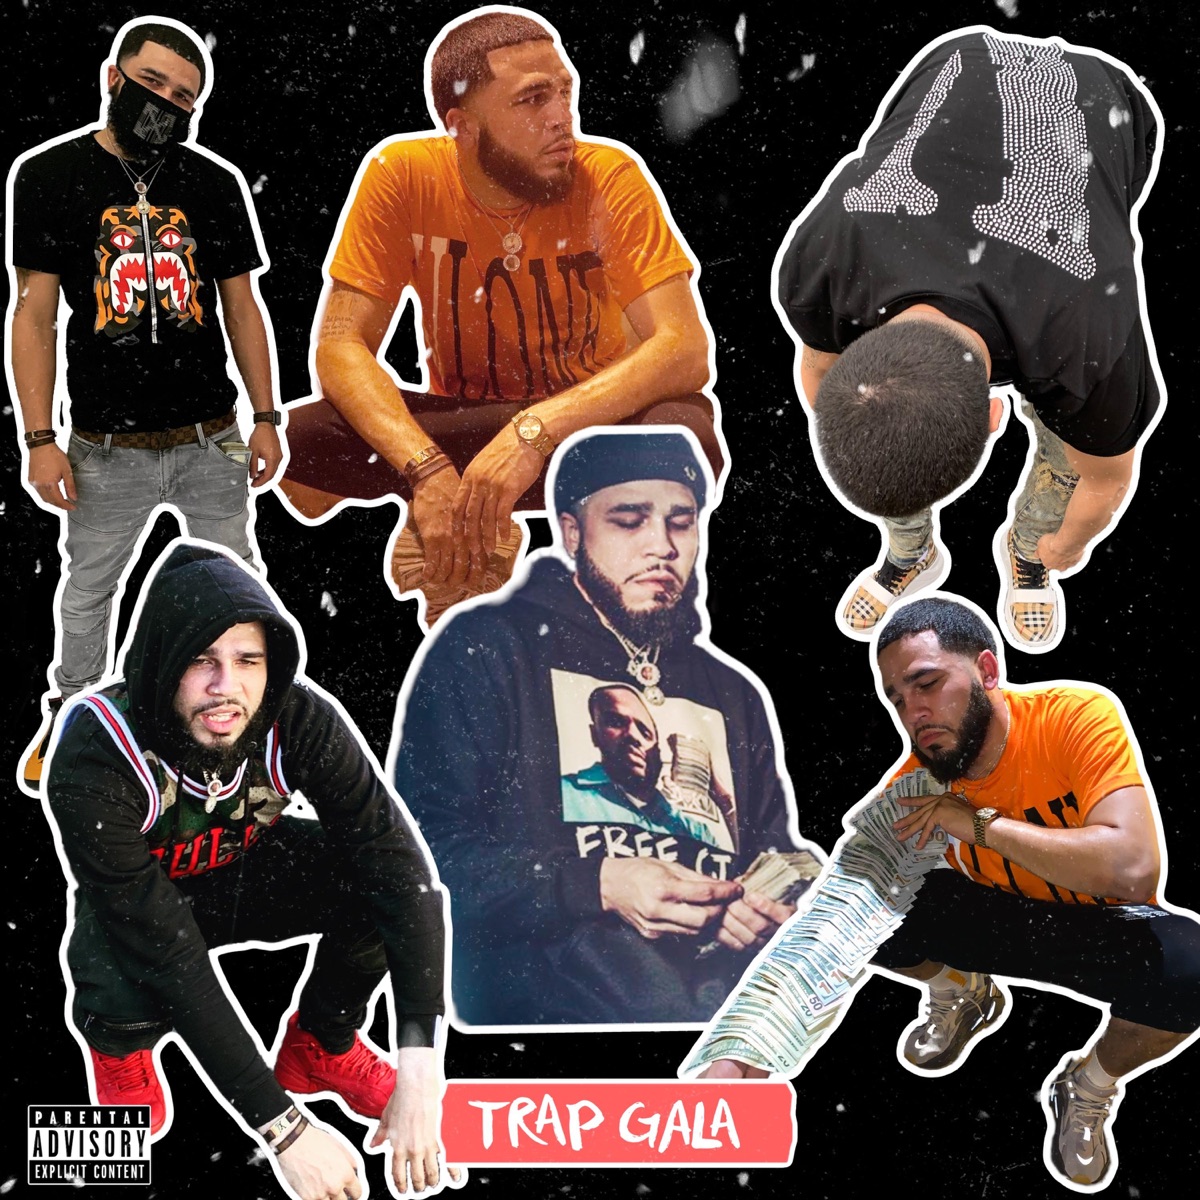 Trap Gala - Single - Album by Nosleep Kilo - Apple Music